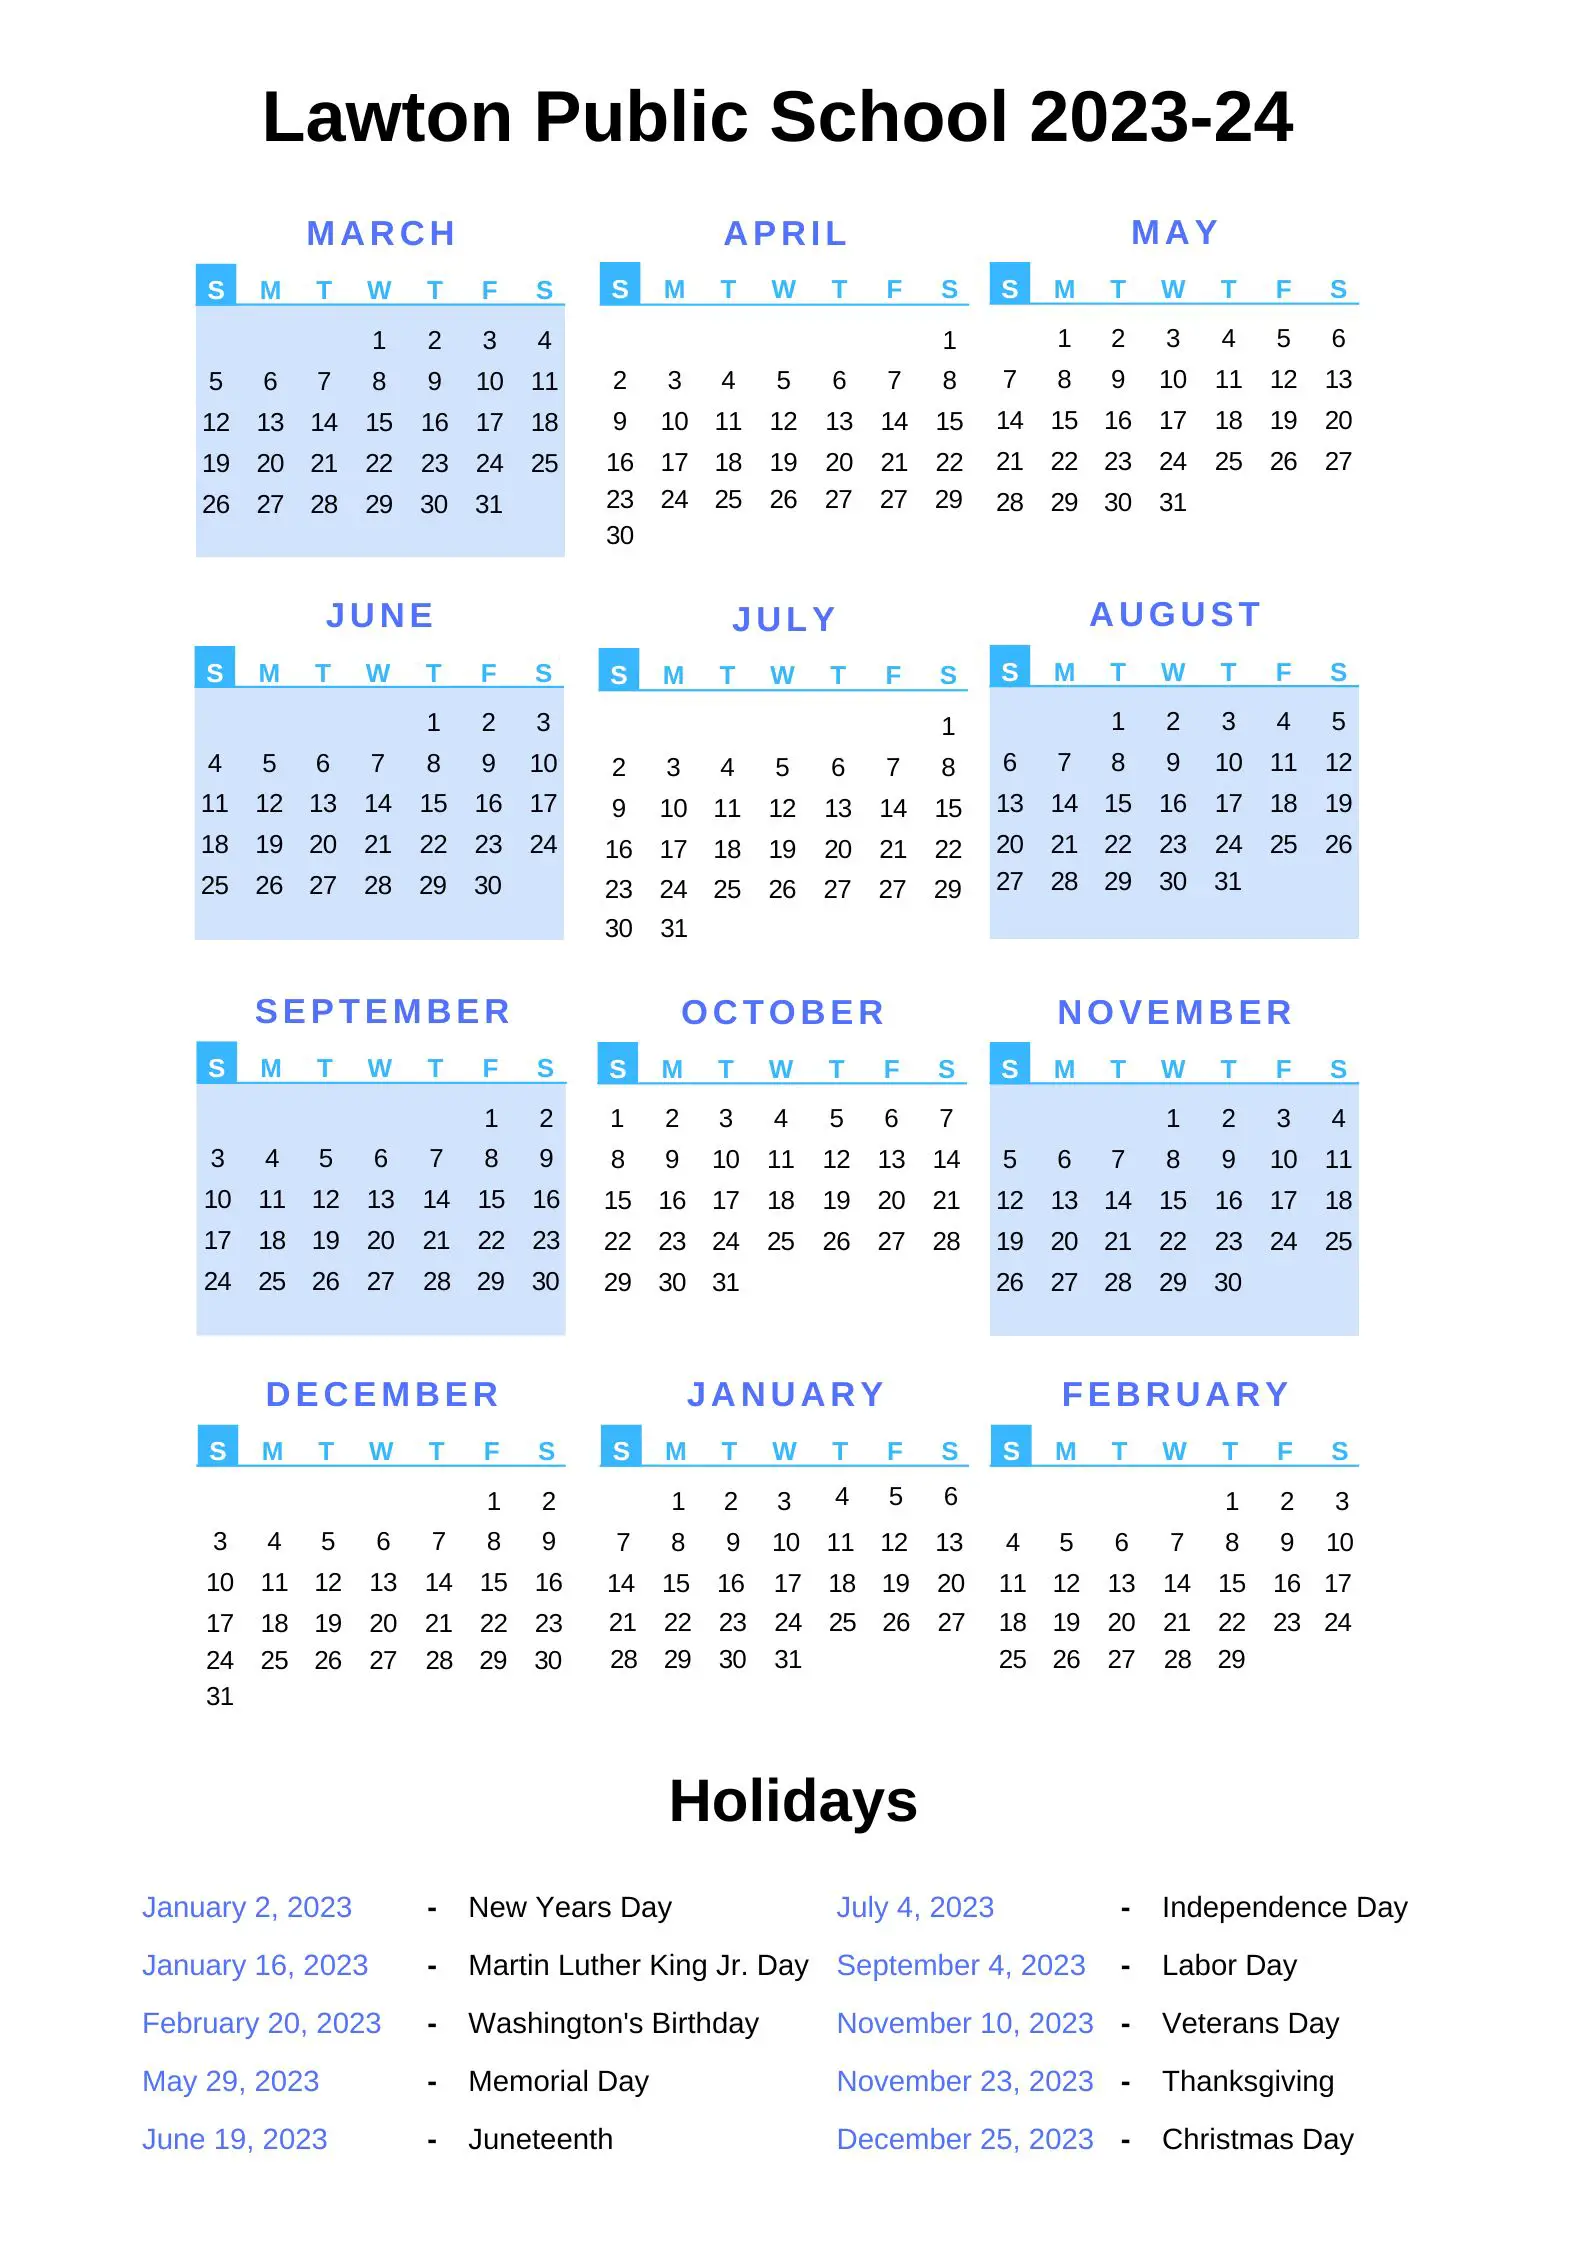 Lawton Public Schools Calendar 2023-24 With Holidays